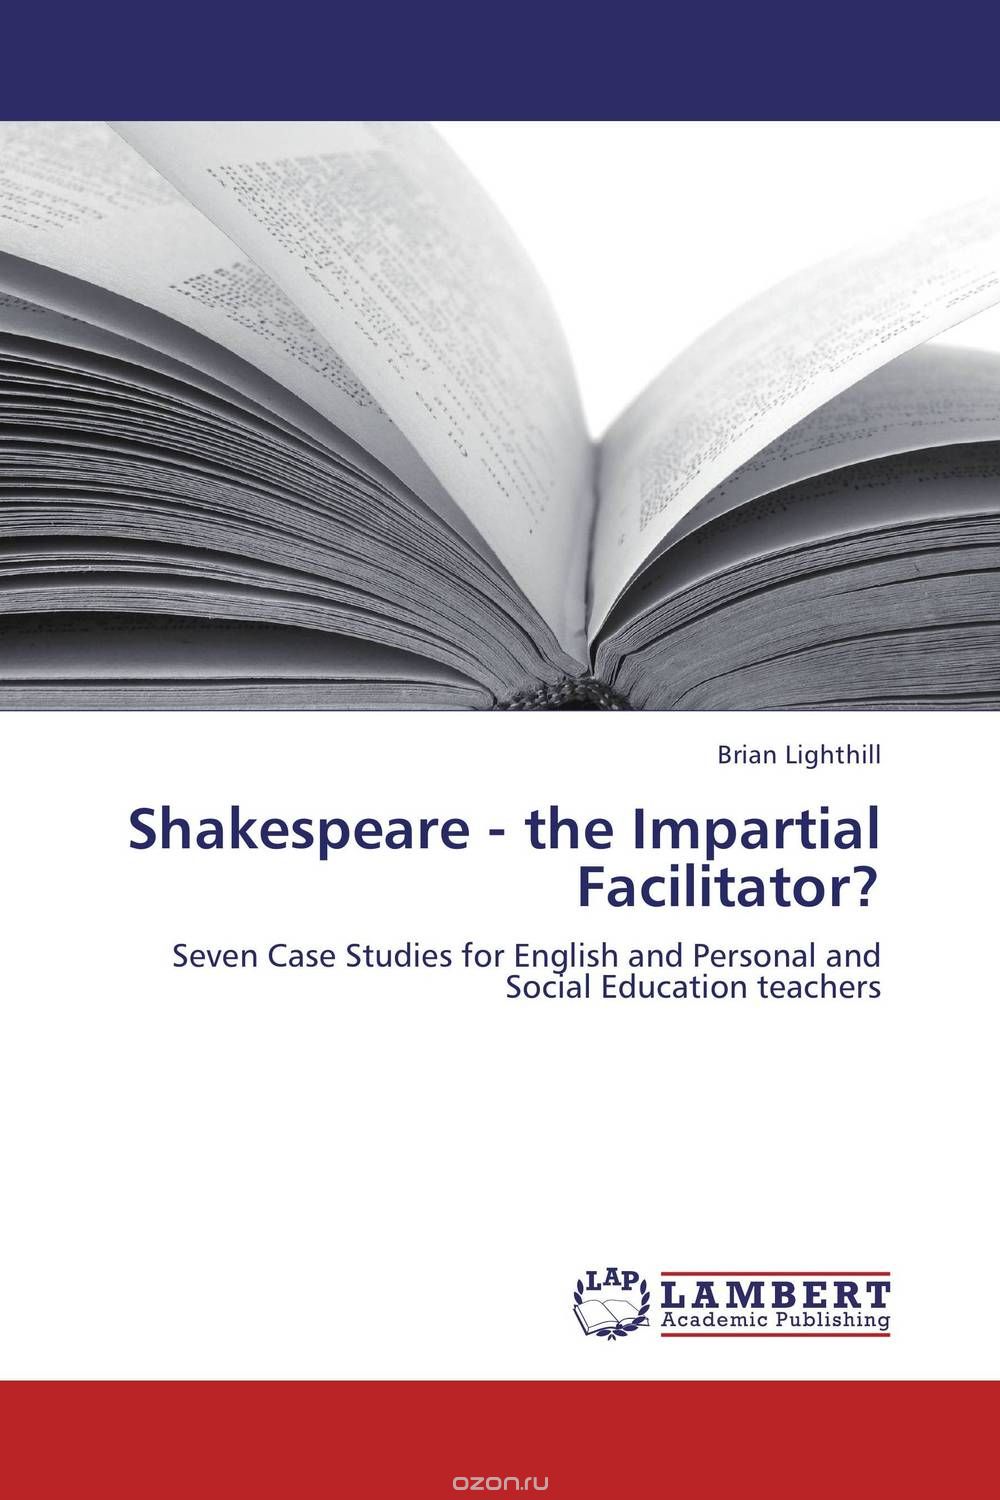 Скачать книгу "Shakespeare - the Impartial Facilitator?"